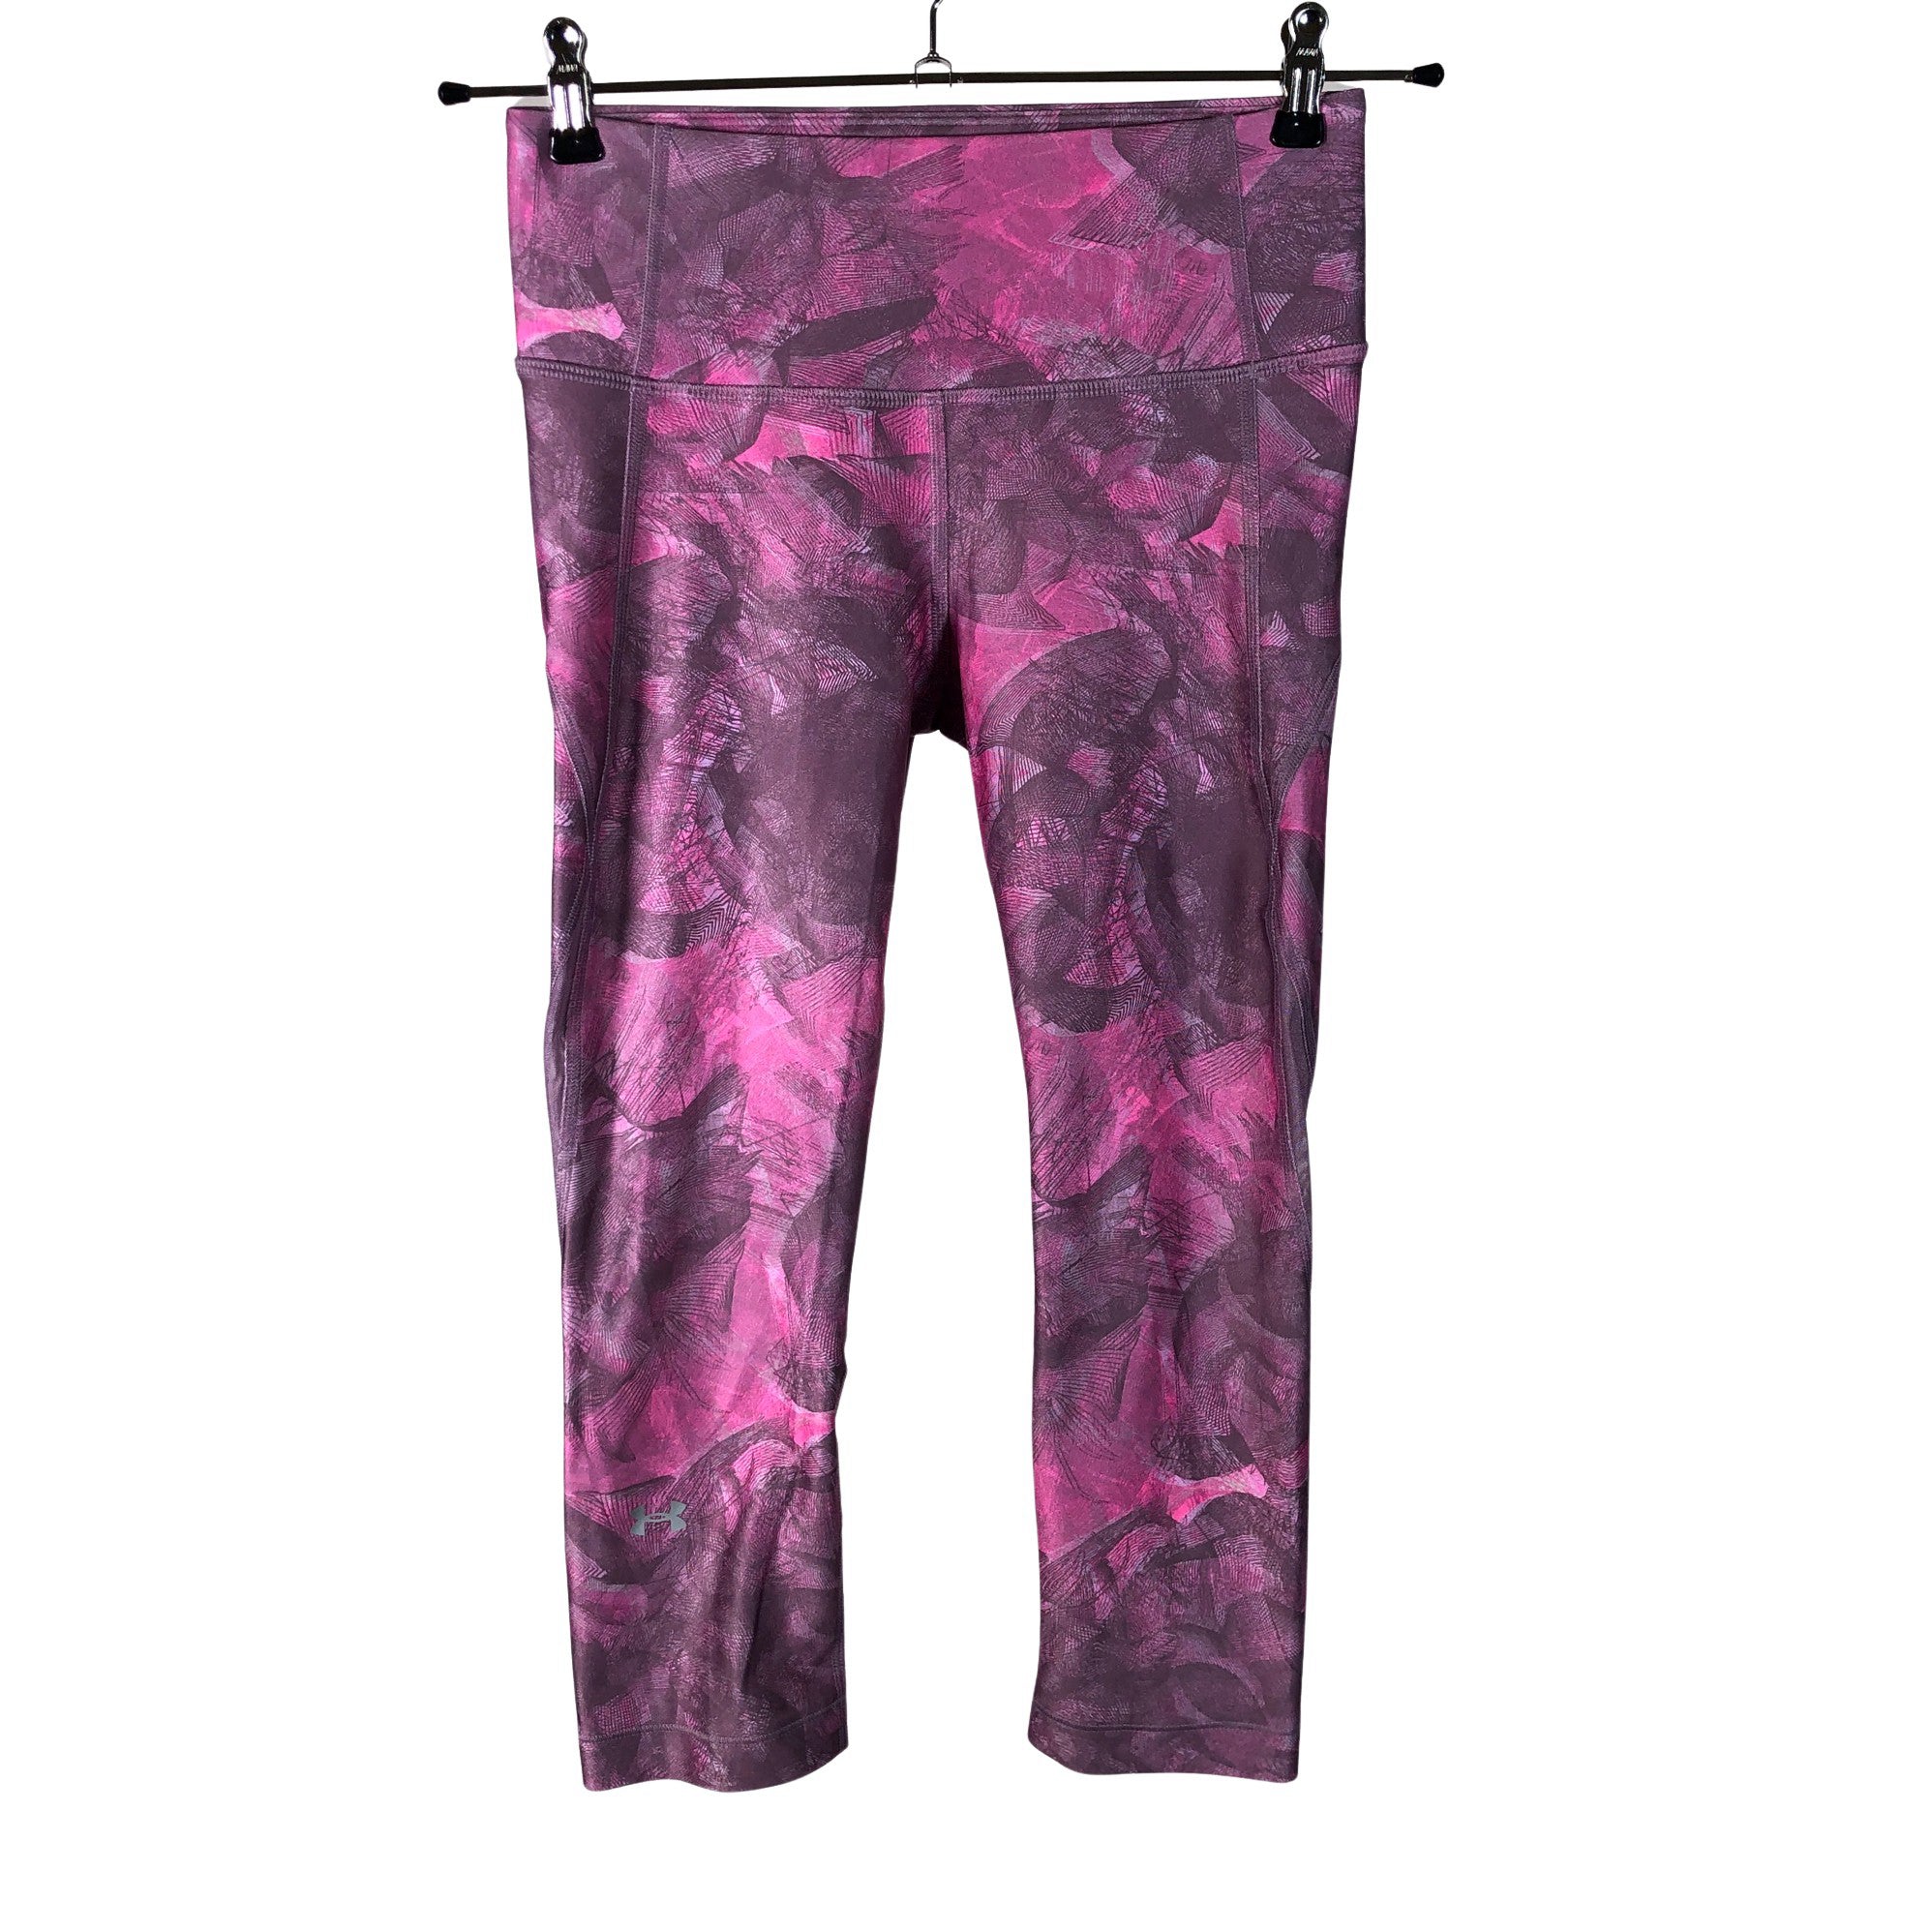 Women's Under Armour Sports capri pants, size 38 (Pink)